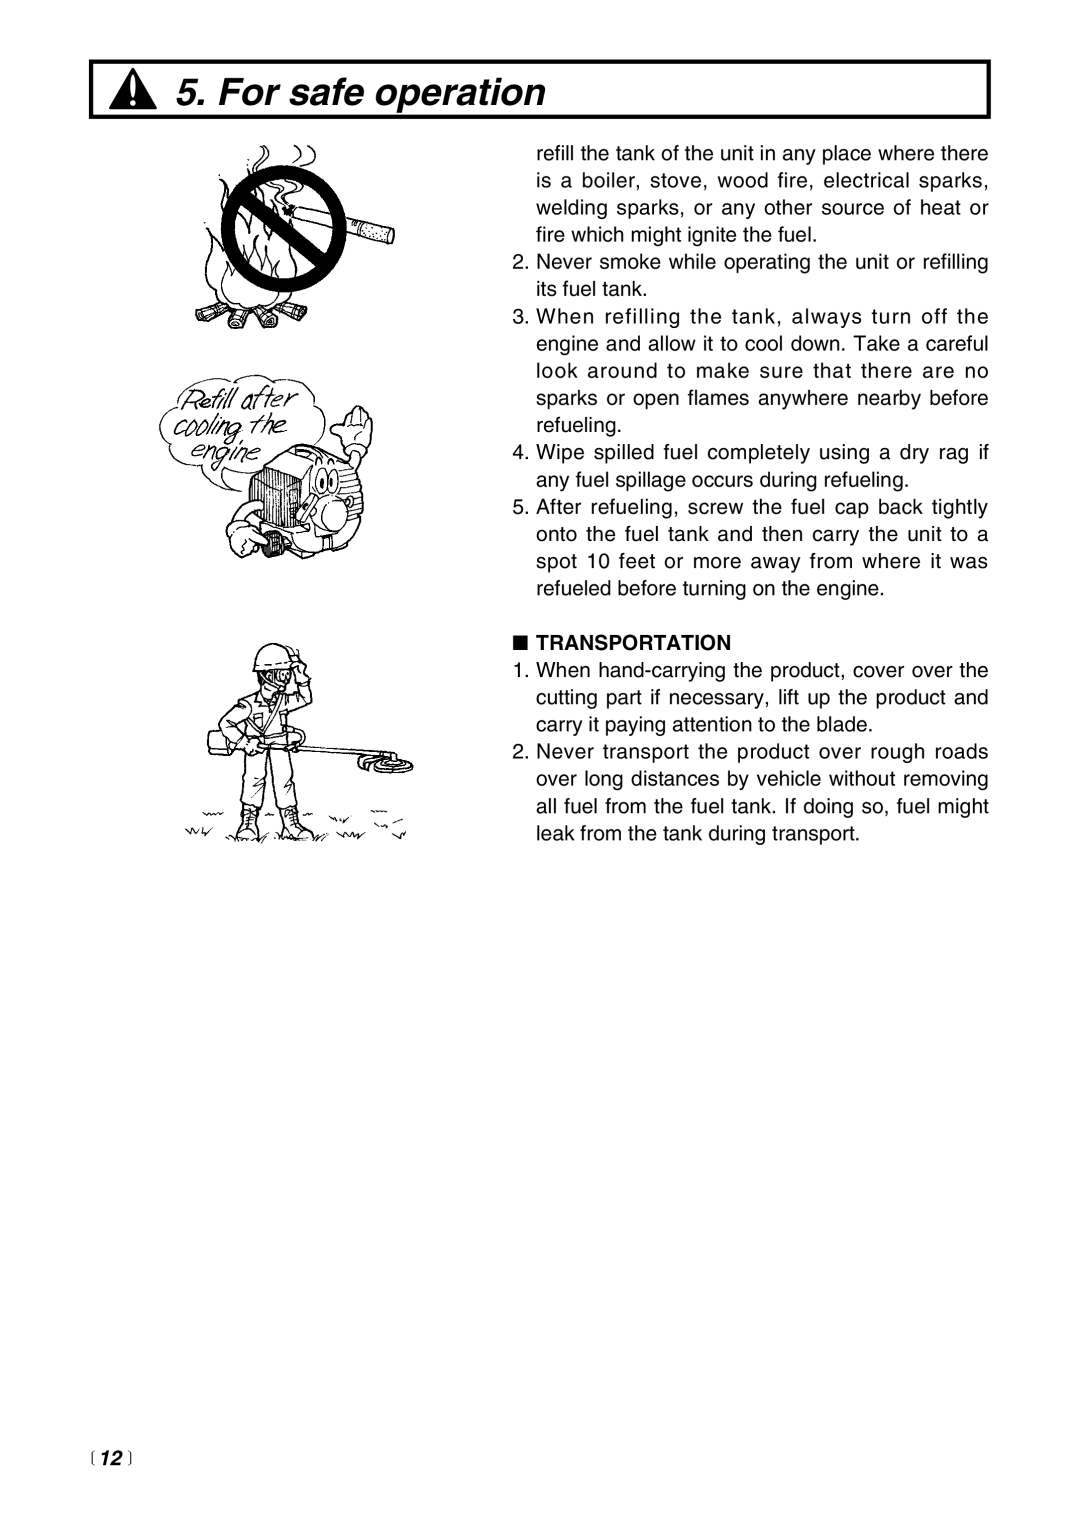 RedMax EX-BC manual  12 , For safe operation, Transportation 